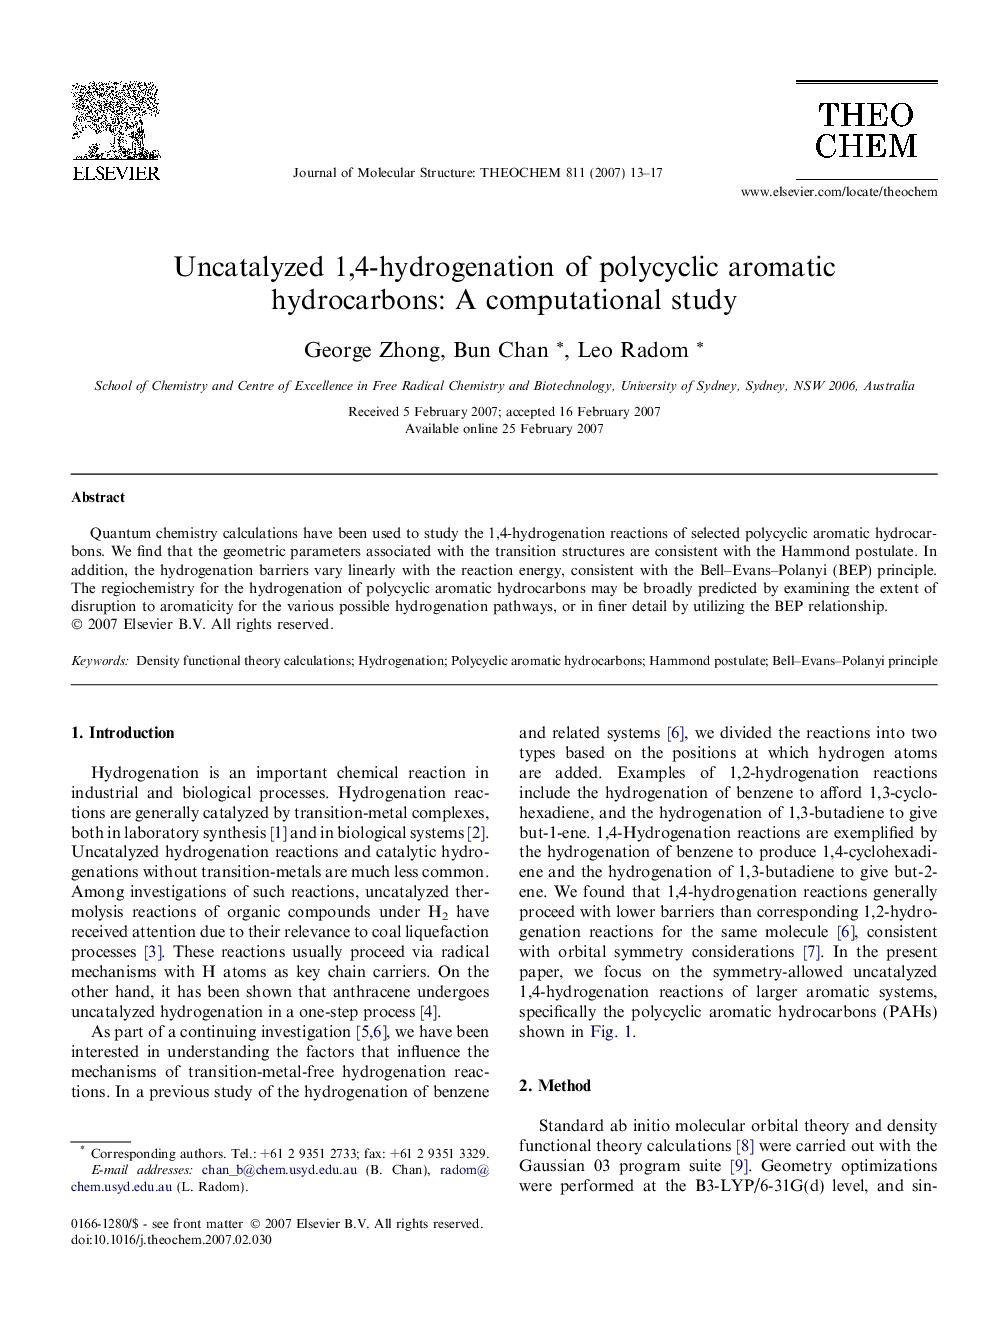 Uncatalyzed 1,4-hydrogenation of polycyclic aromatic hydrocarbons: A computational study